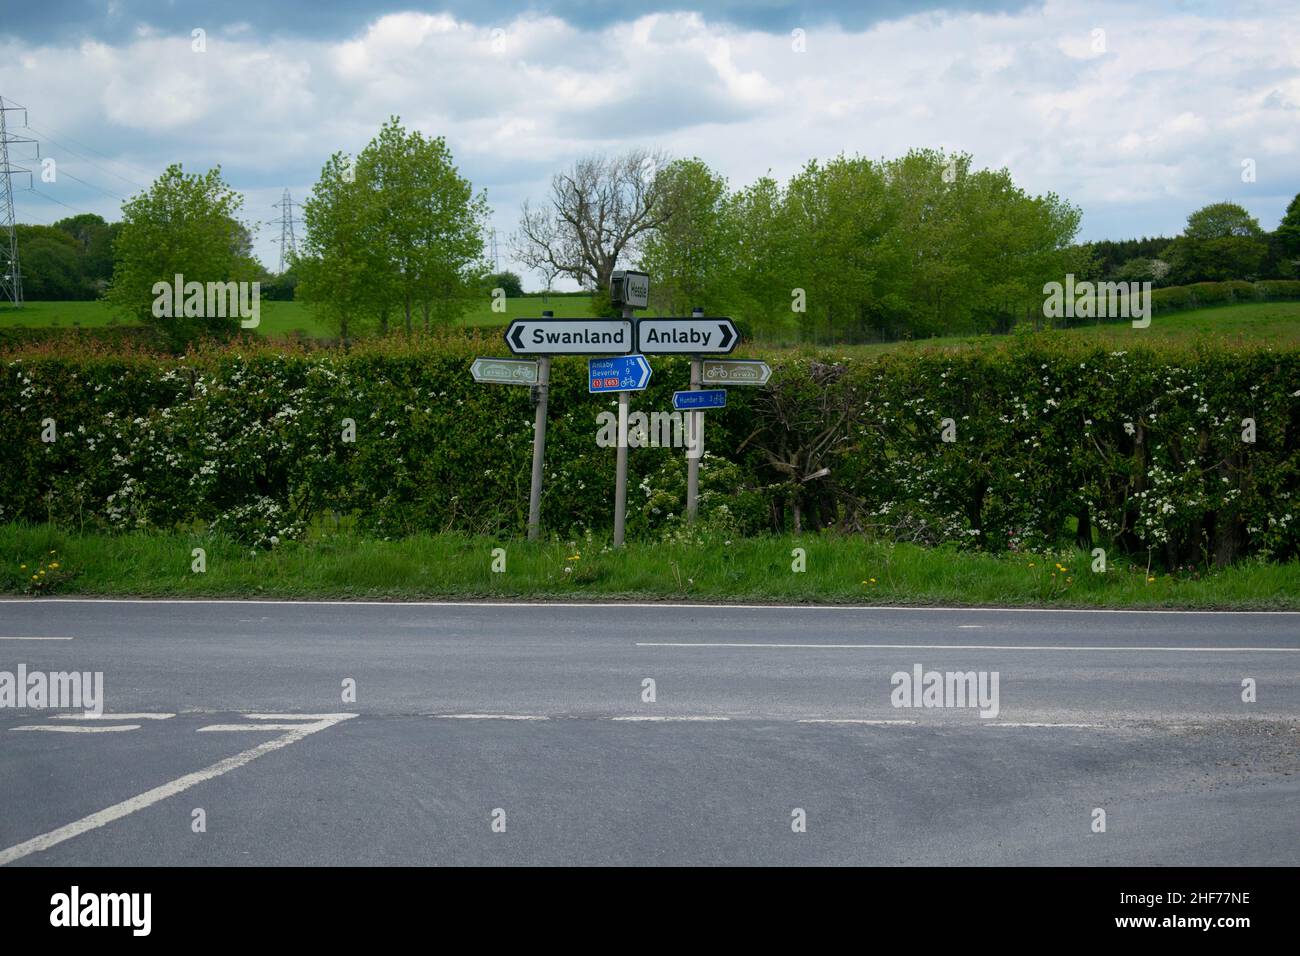 Straßenschild in Richtung Swanland und Anlaby in Kingston upon Hull, East Yorkshire (Kulturstadt 2017) Stockfoto